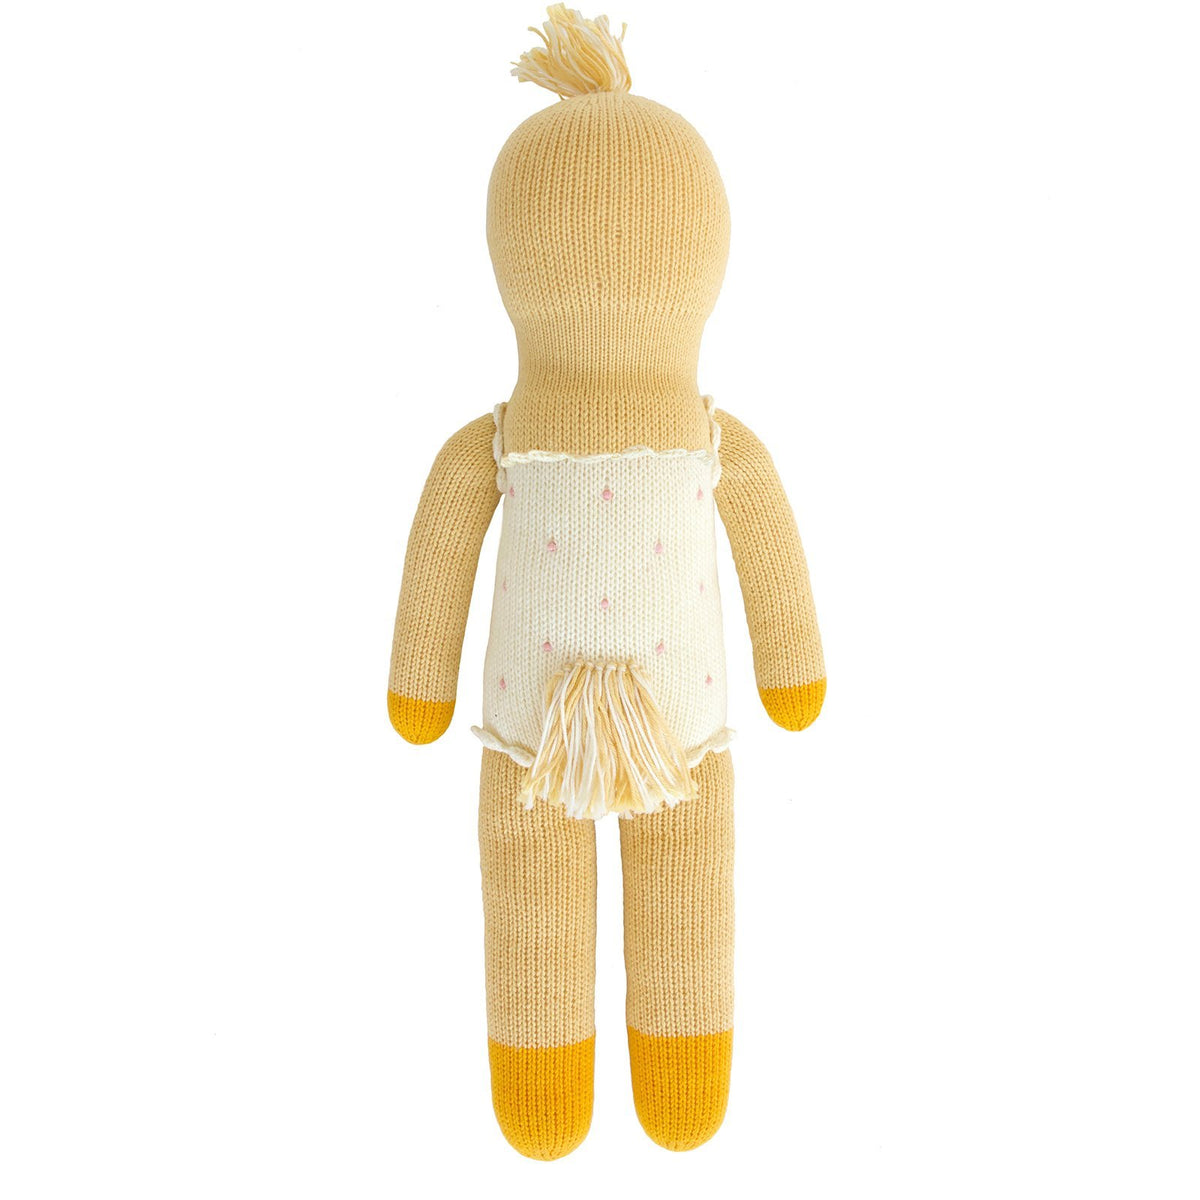 Blabla Knit Doll, Lucille the Duck - Regular Size